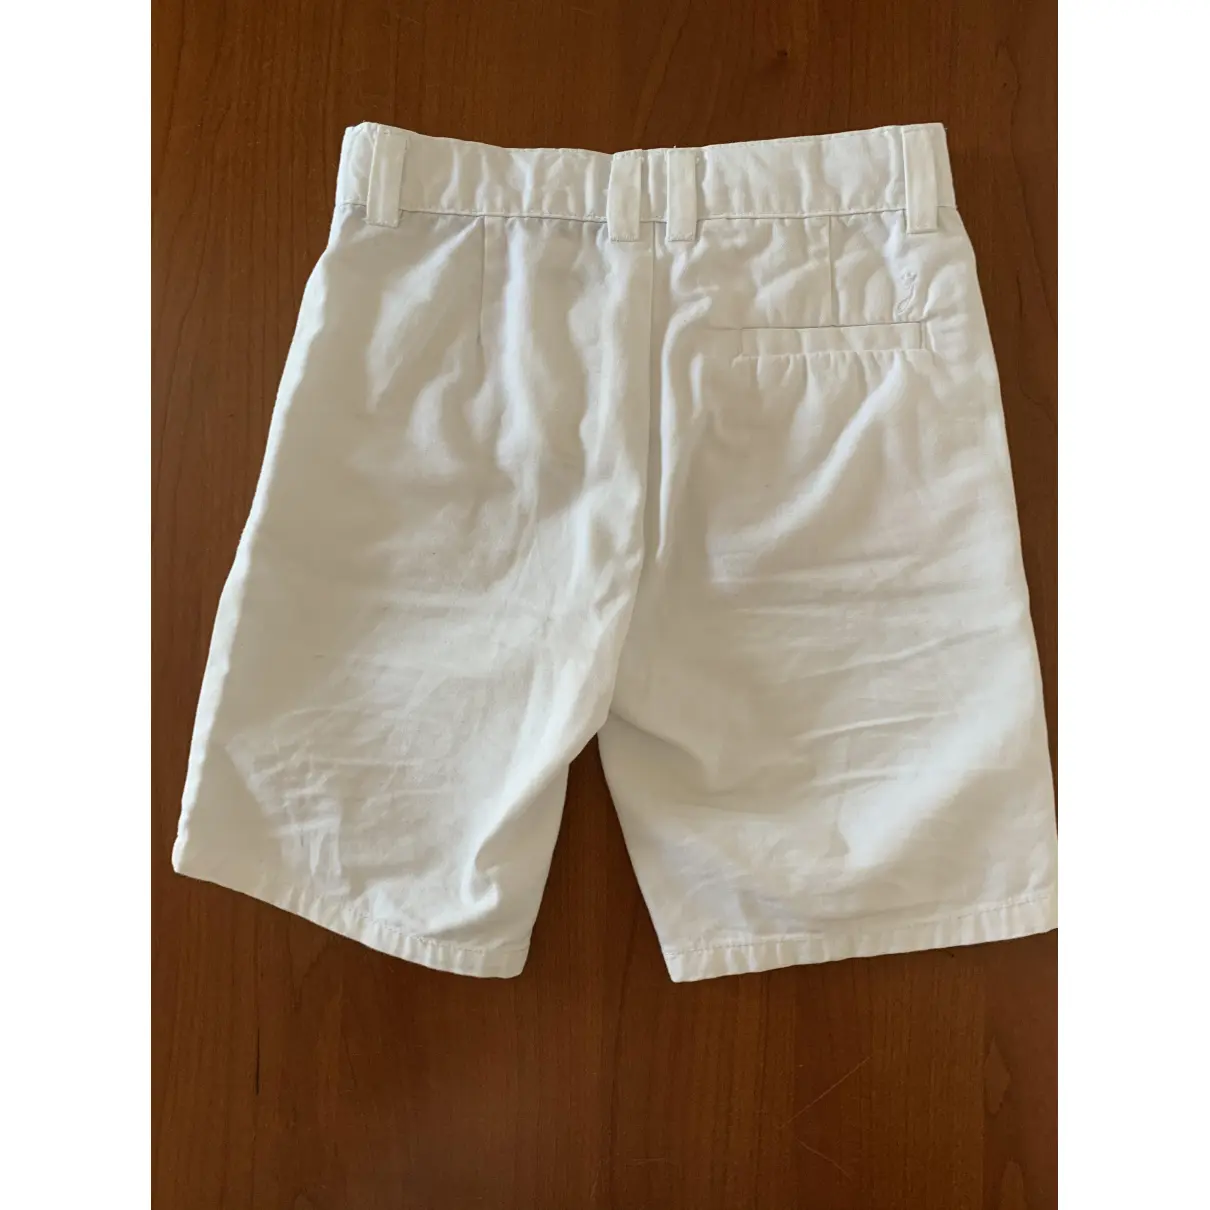 Buy Jacadi White Cotton Shorts online